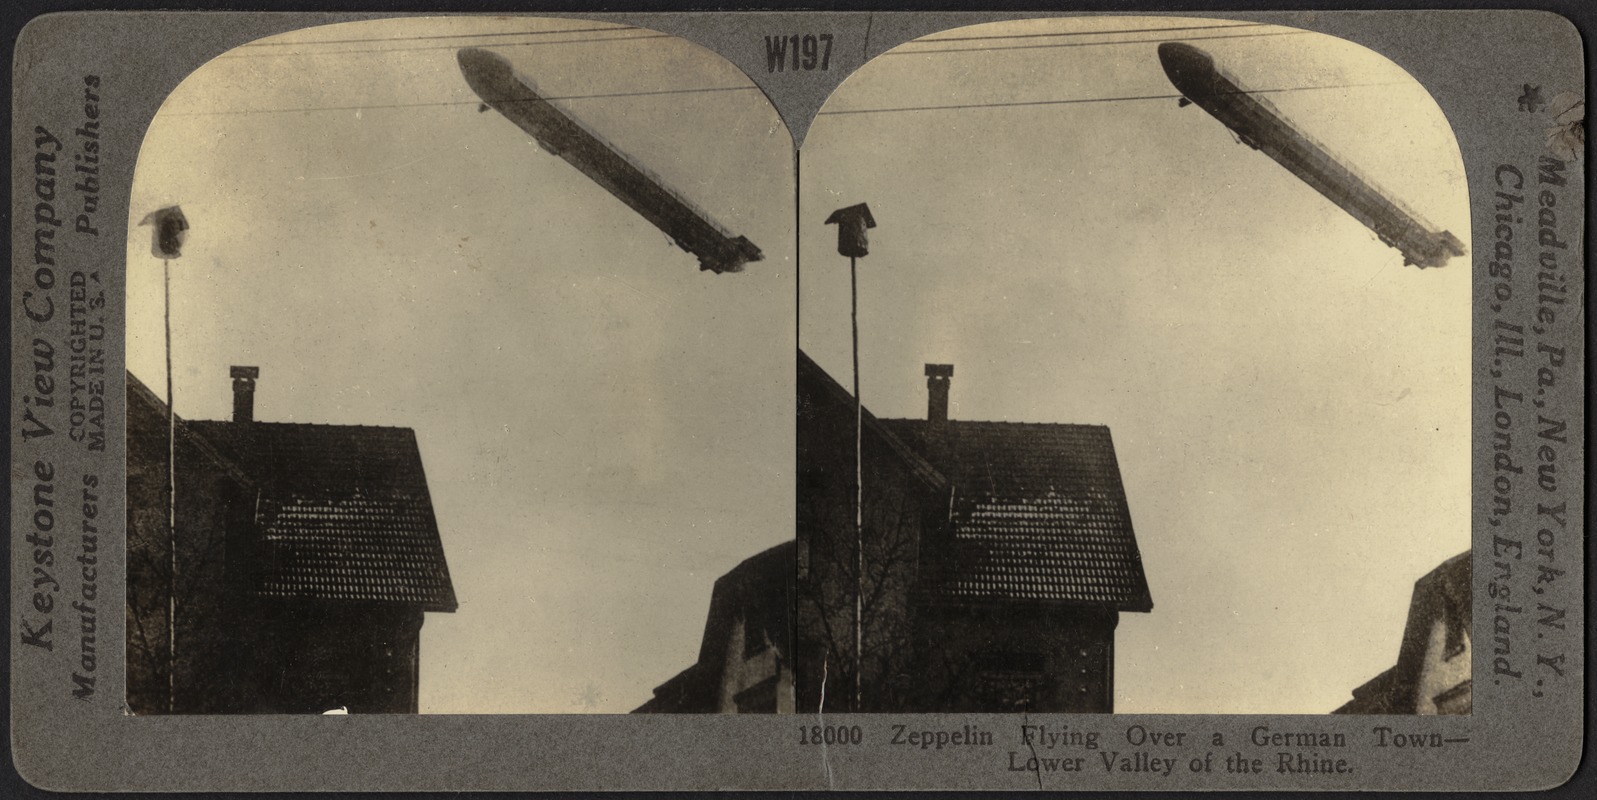 Zeppelin flying over a German town